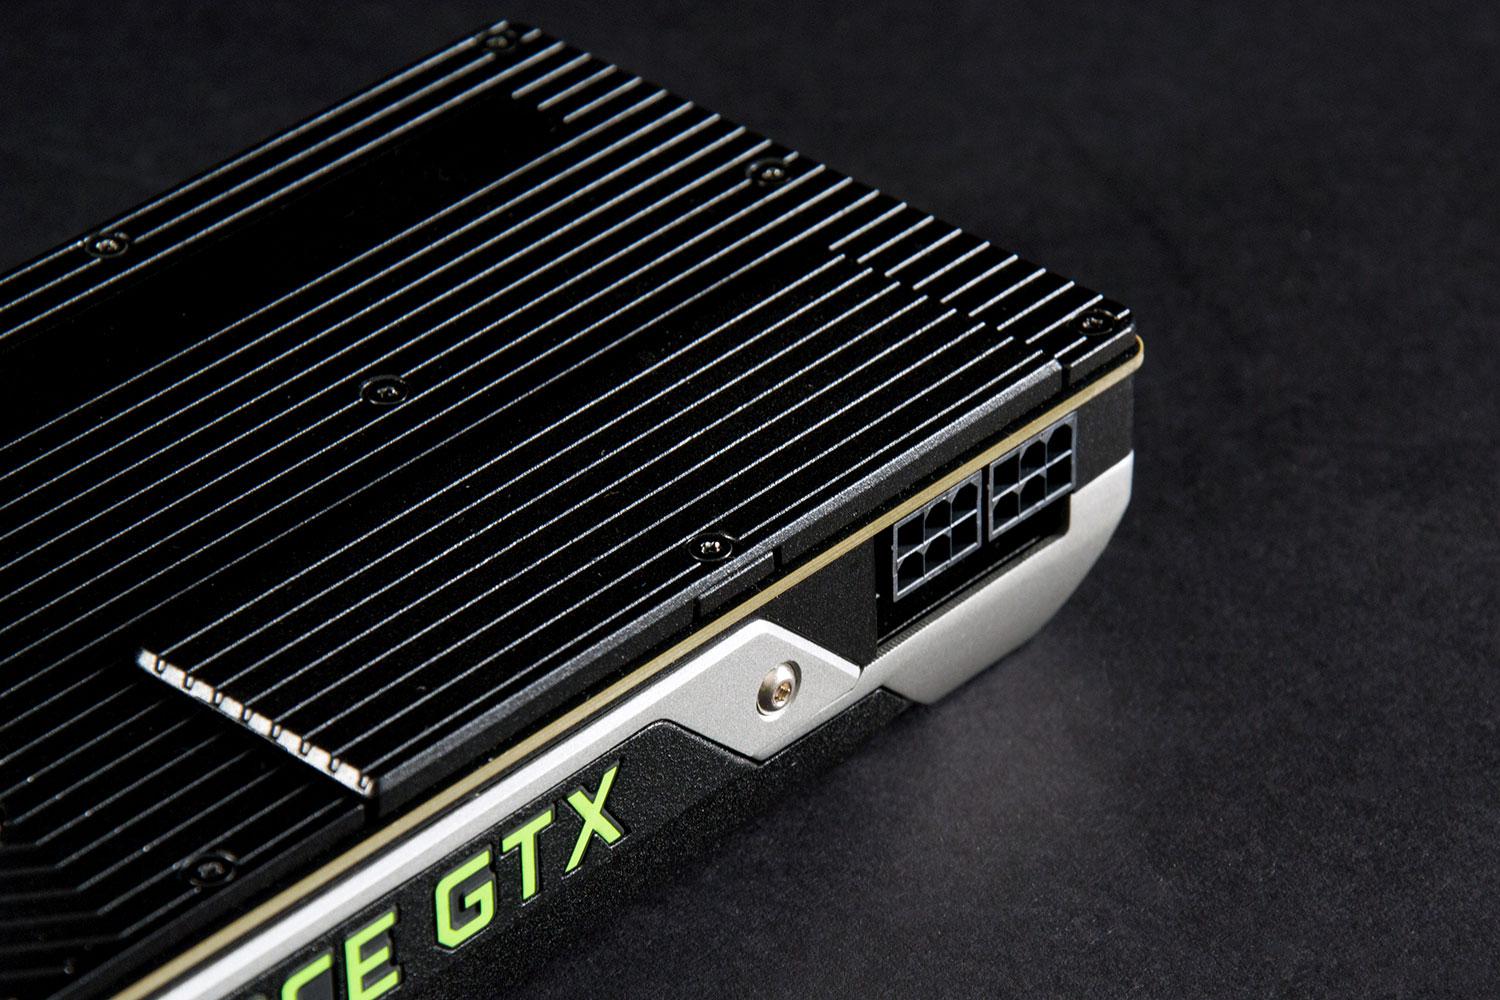 nvidia geforce gtx 980 review gtx980 powerlets